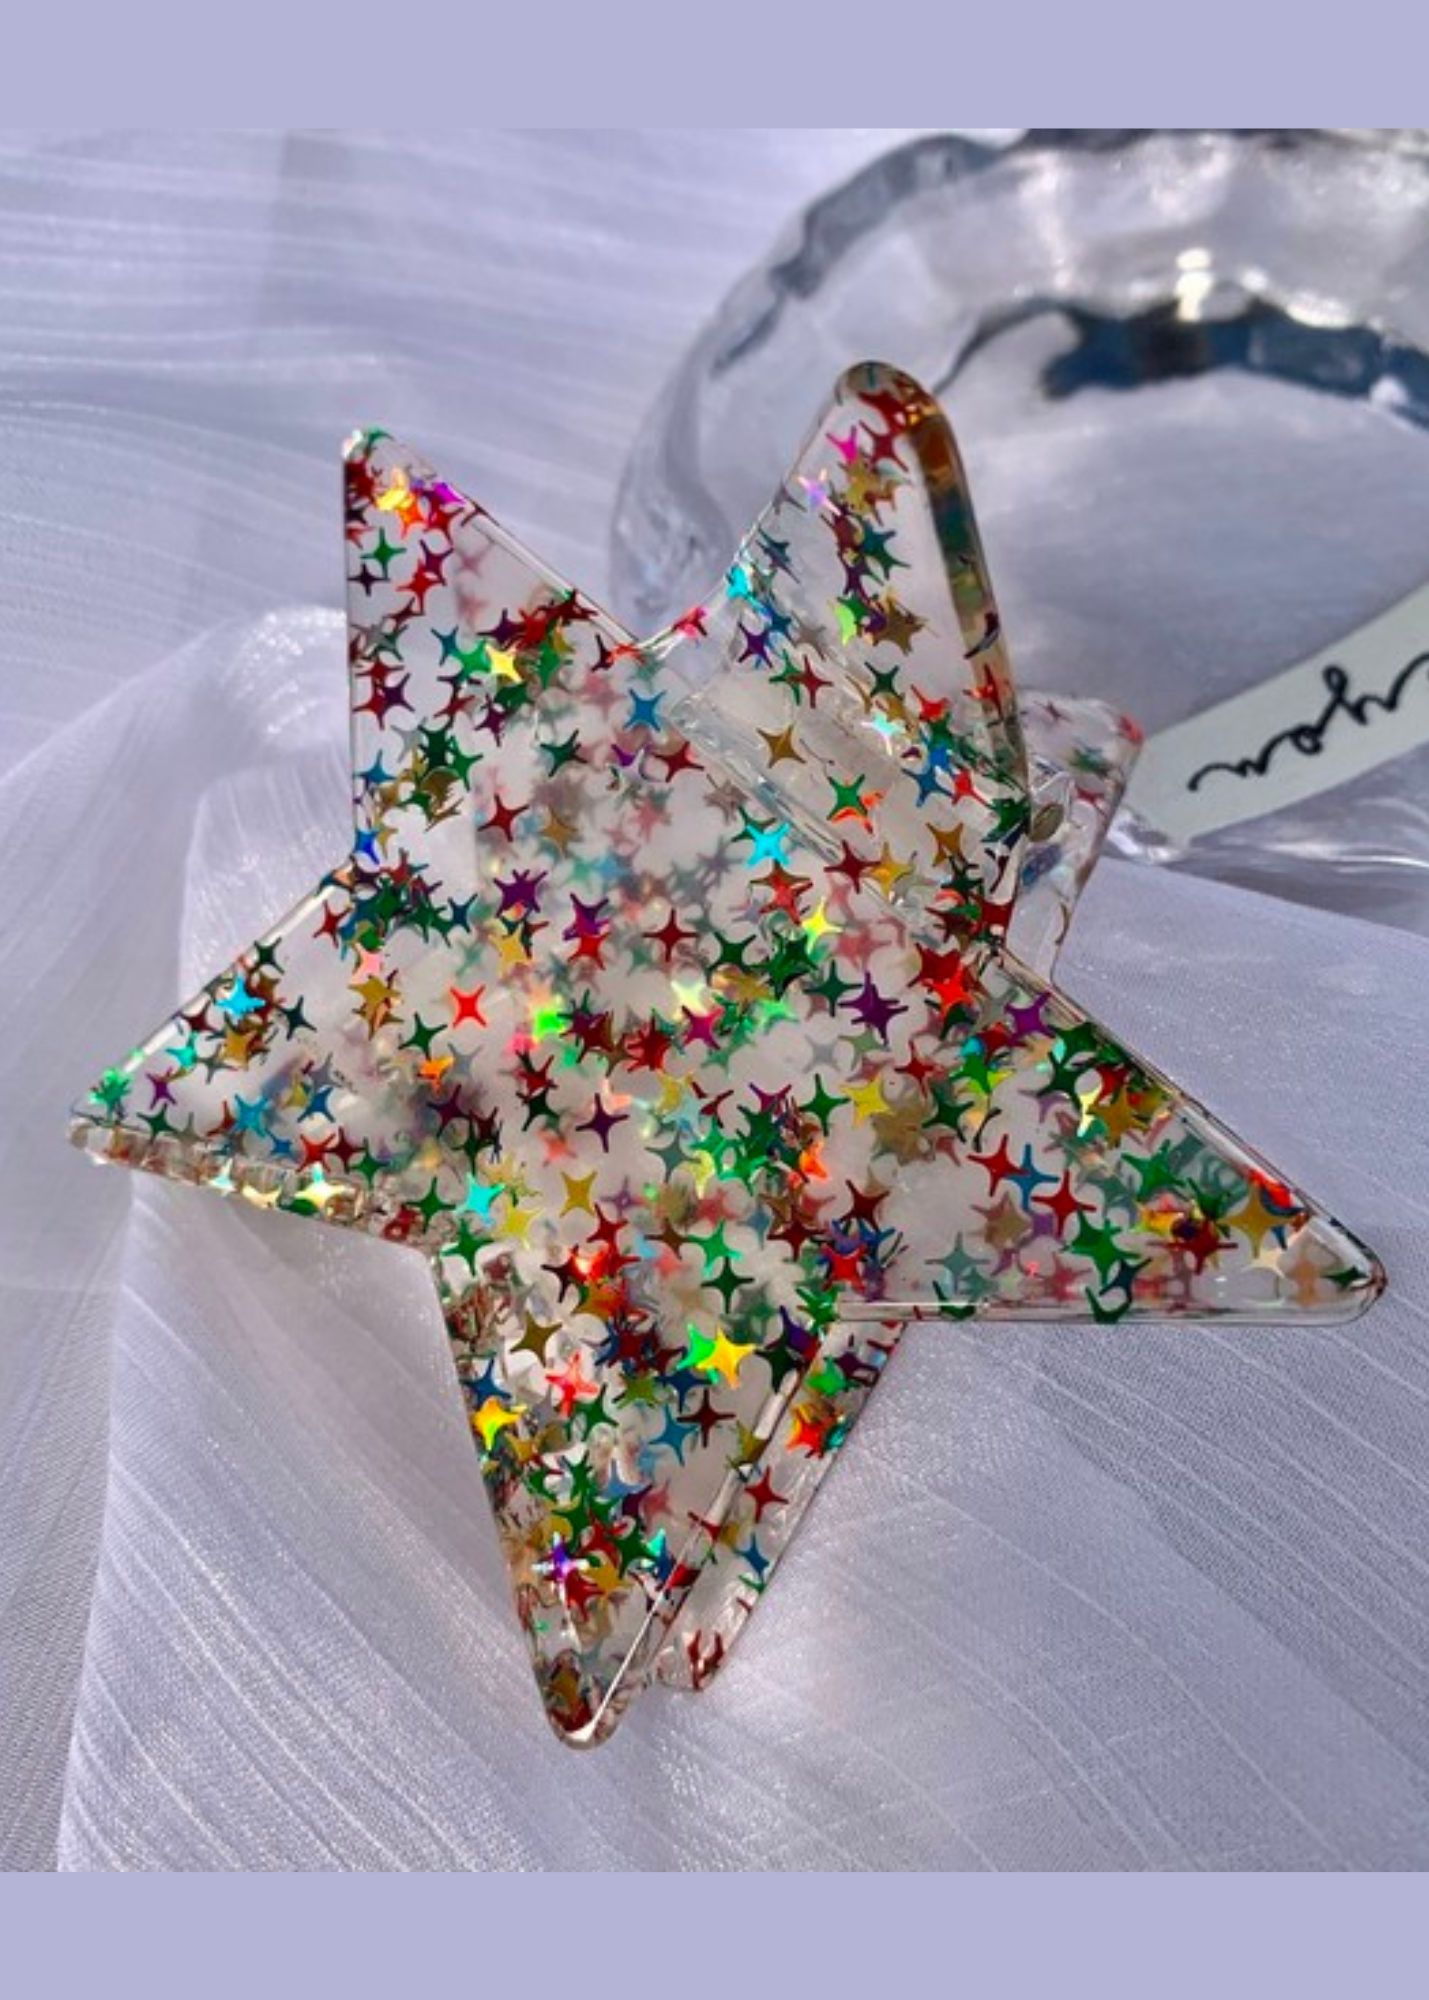 The Edit - Rainbow Confetti Star Hair Claw